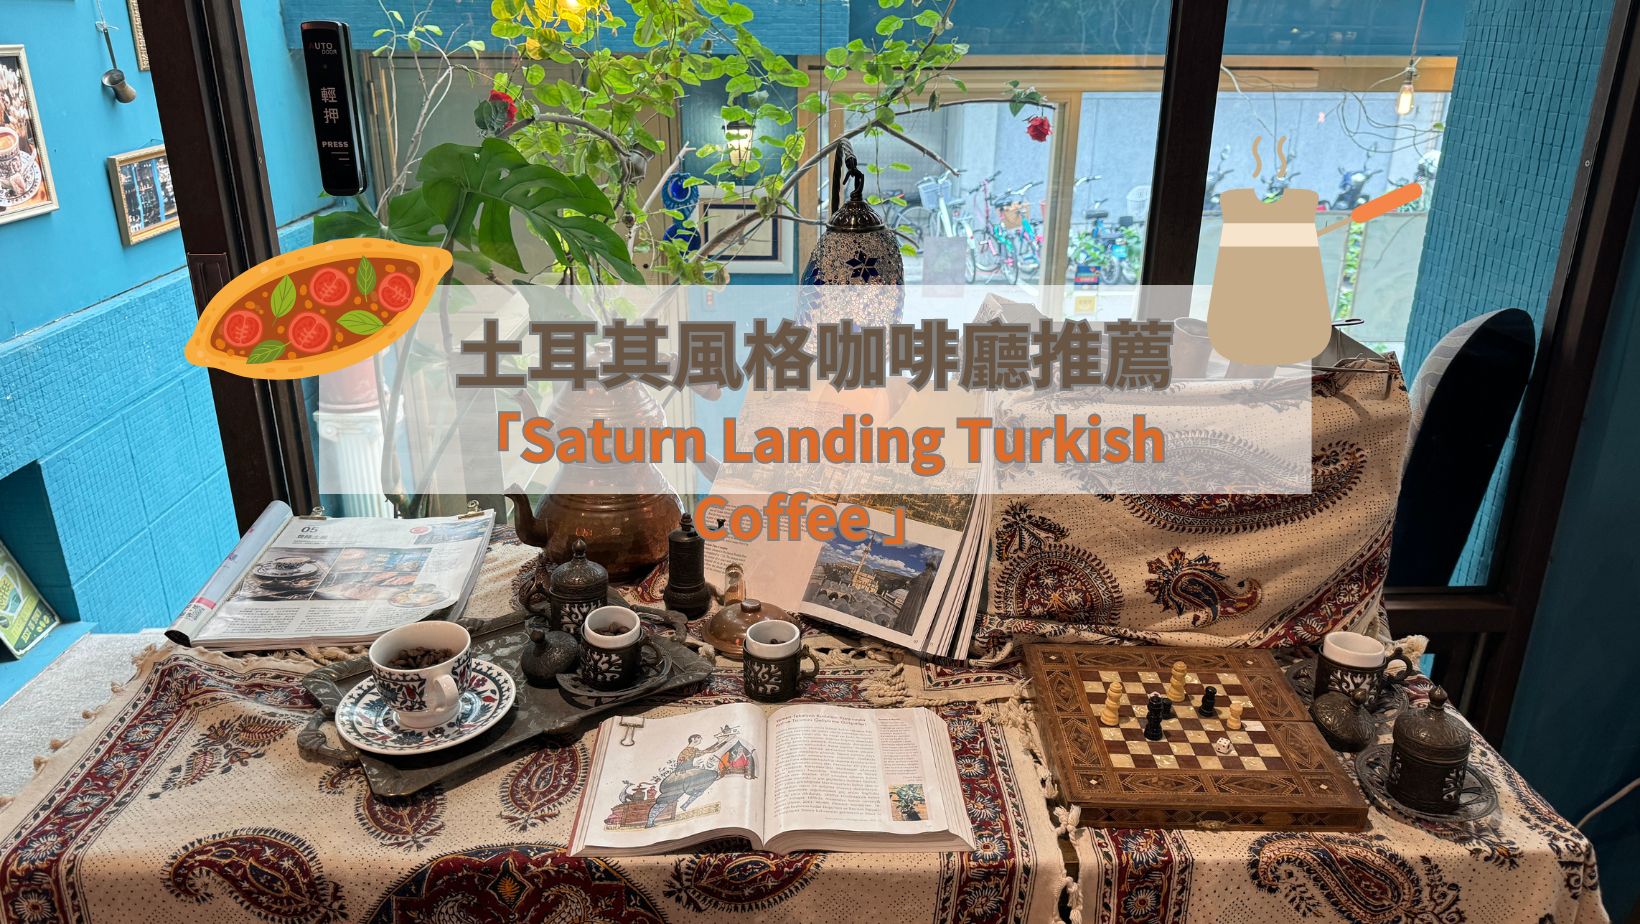 avery davis 「Saturn Landing Turkish Coffee 」 土耳其風格咖啡廳推薦